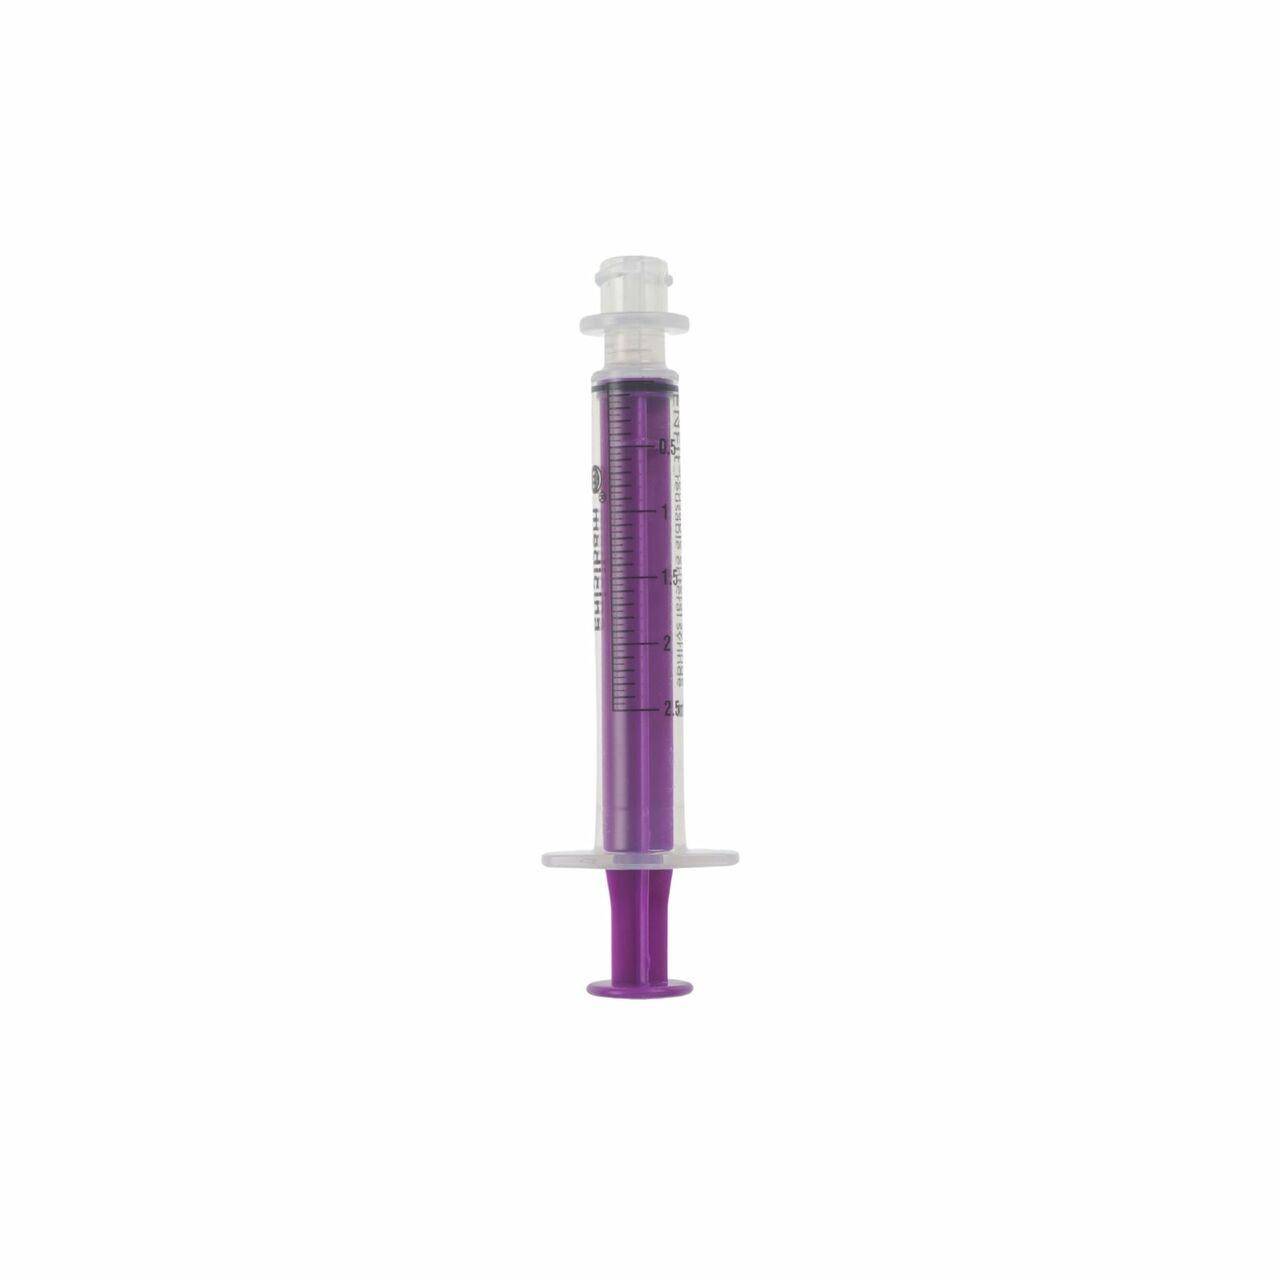 2.5ml ENFIT Reusable Low Dose Medicina Syringe - UKMEDI